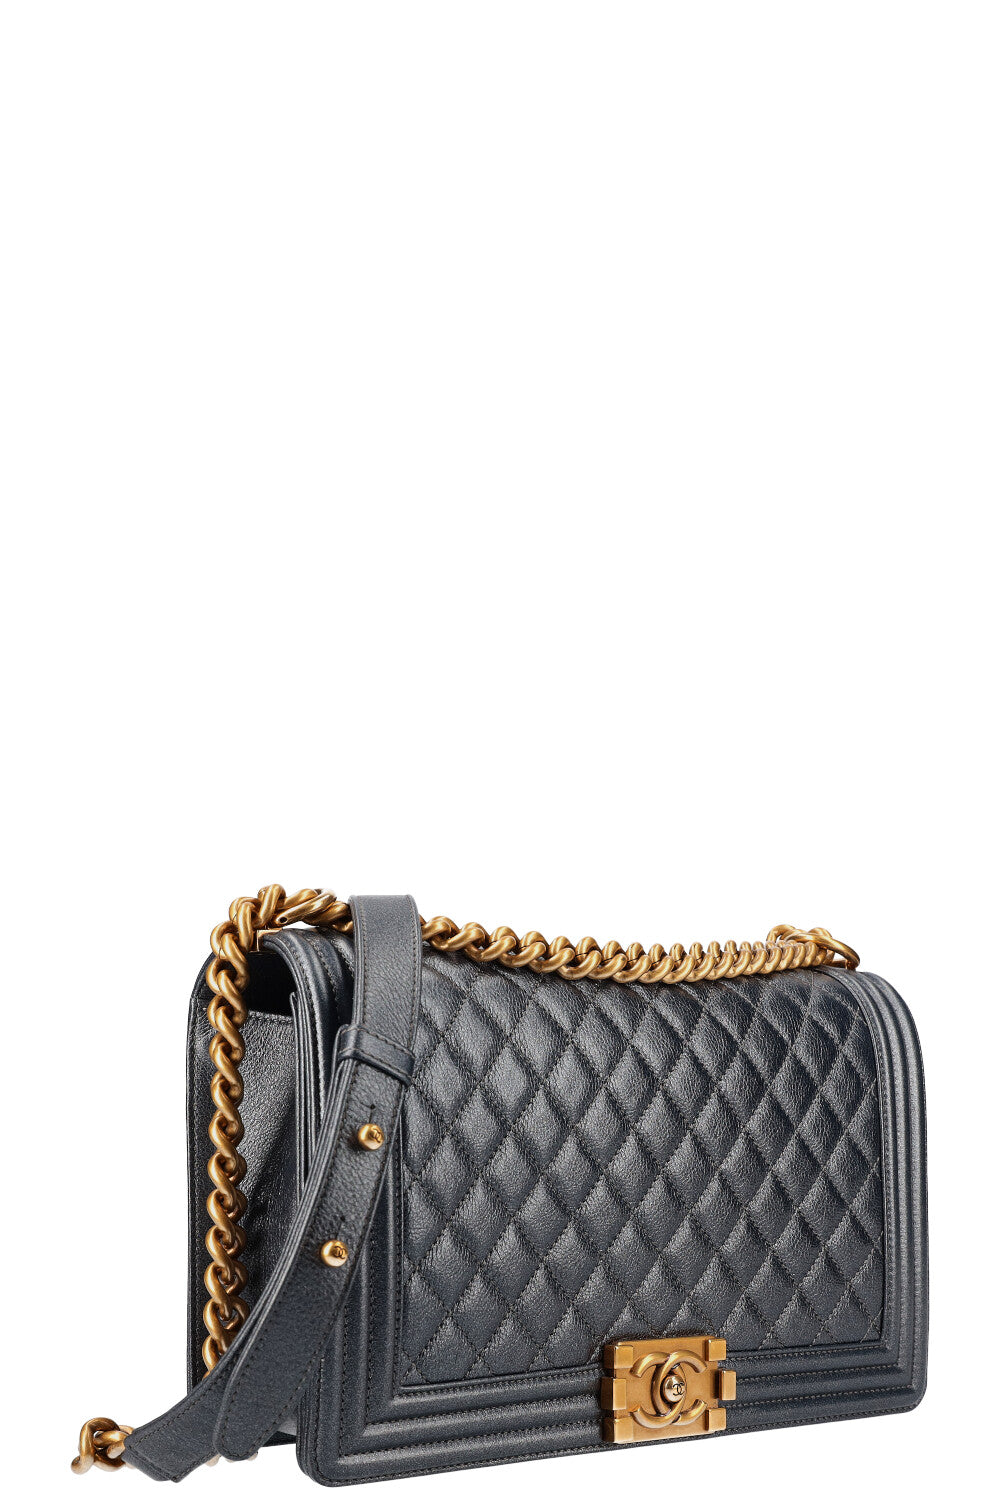 Large Shopping Bag  Metallic calfskin  gold metal  Fashion  CHANEL   Bags Chanel Fashion handbags